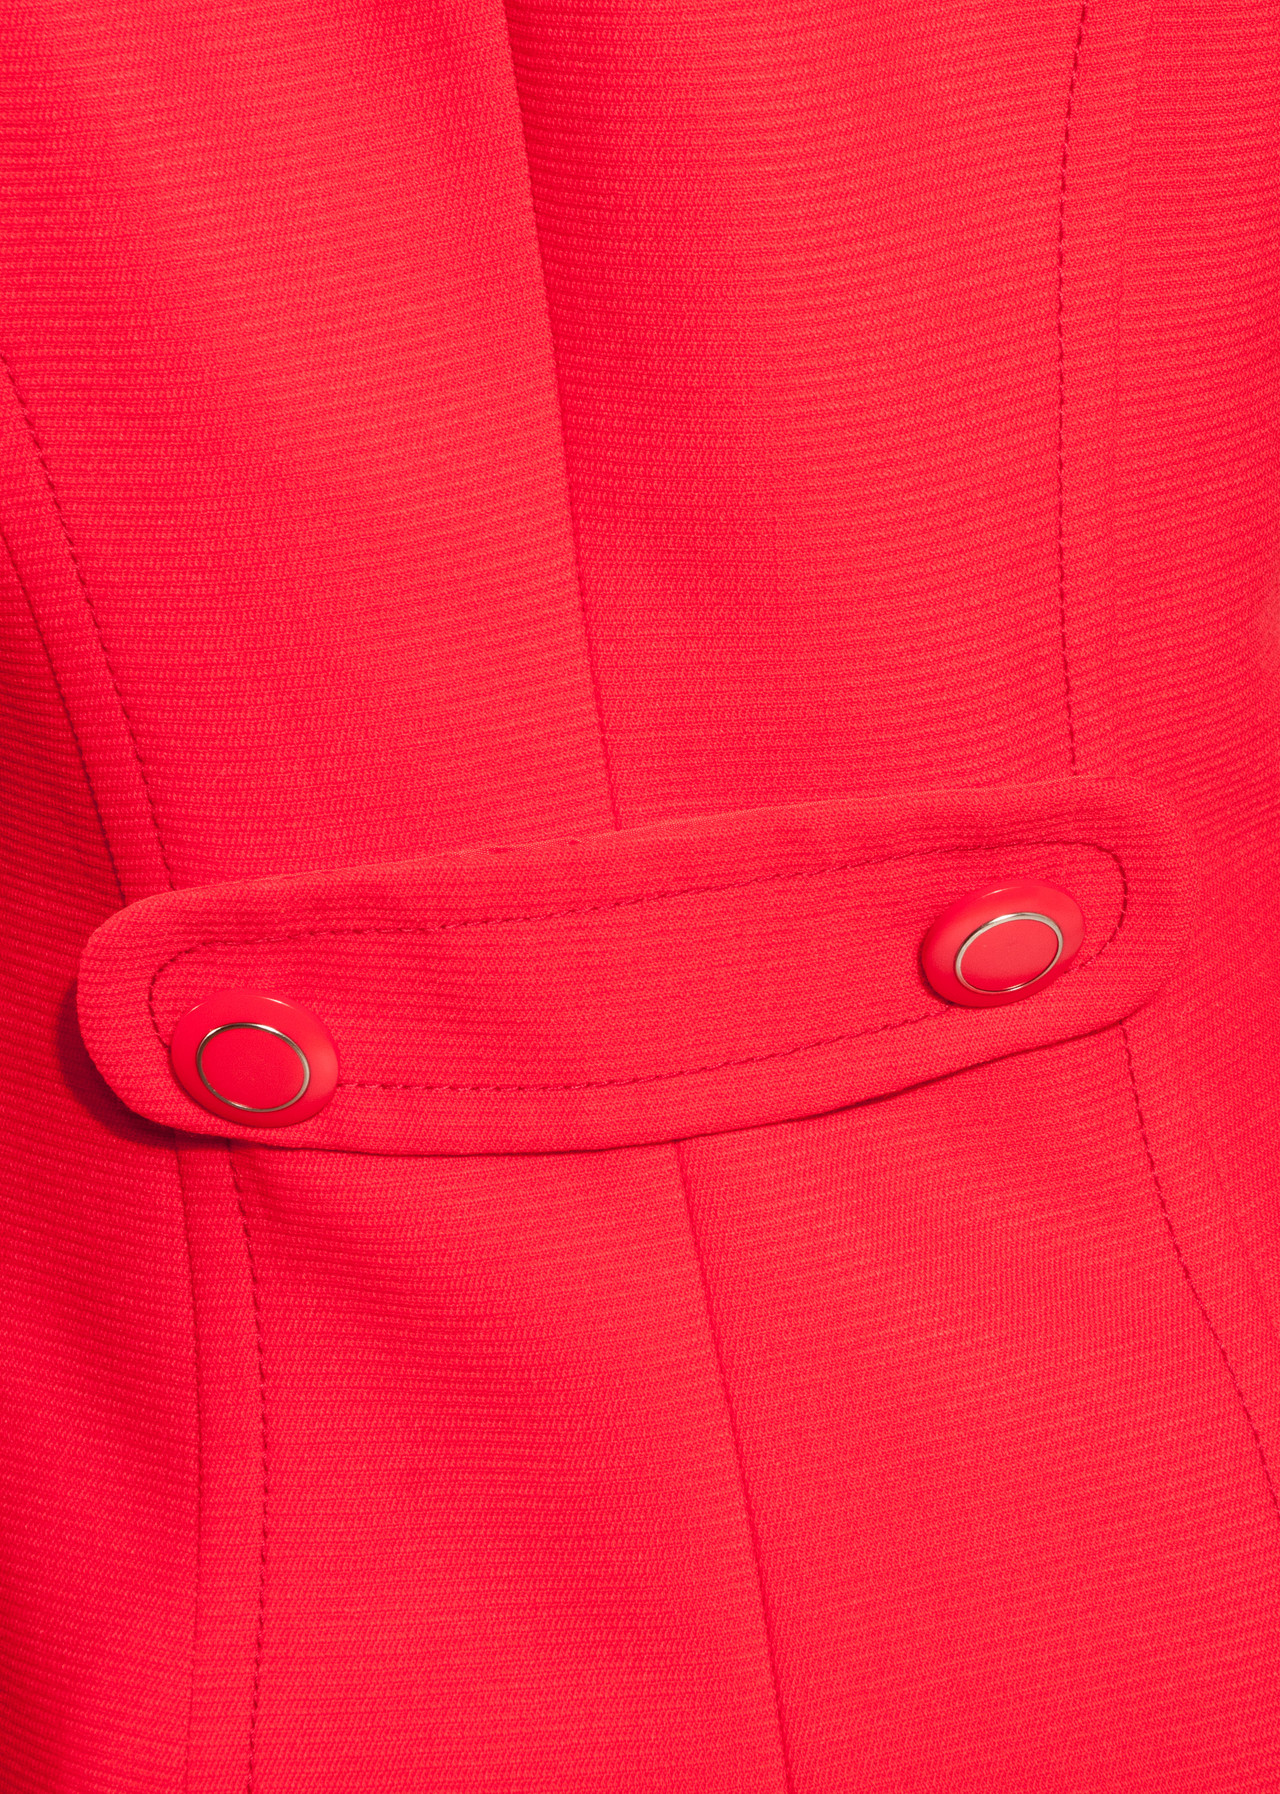 Vintage Coat 60s Mod Red Swinging Sixties Jacket – Pop Sick Vintage